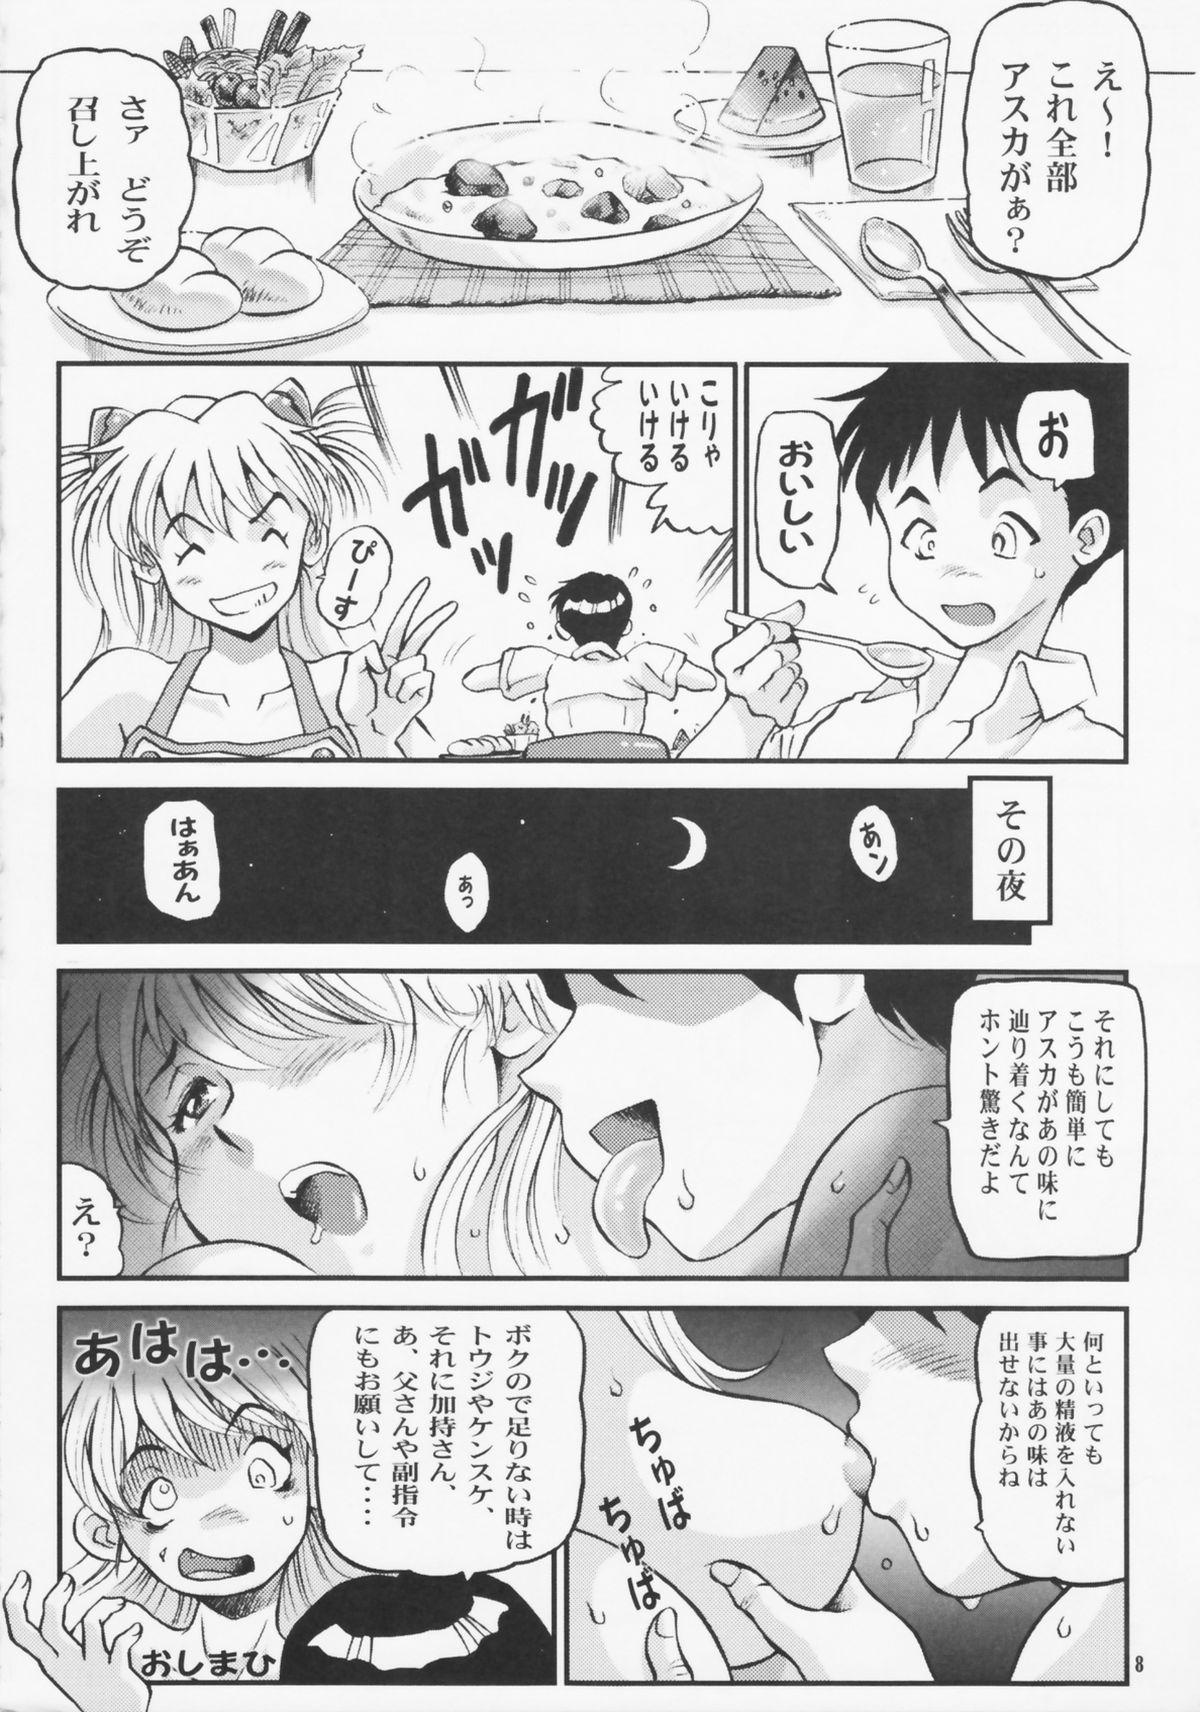 Reality Shin Han-juuryoku XXII - Neon genesis evangelion Pokemon Furry - Page 8